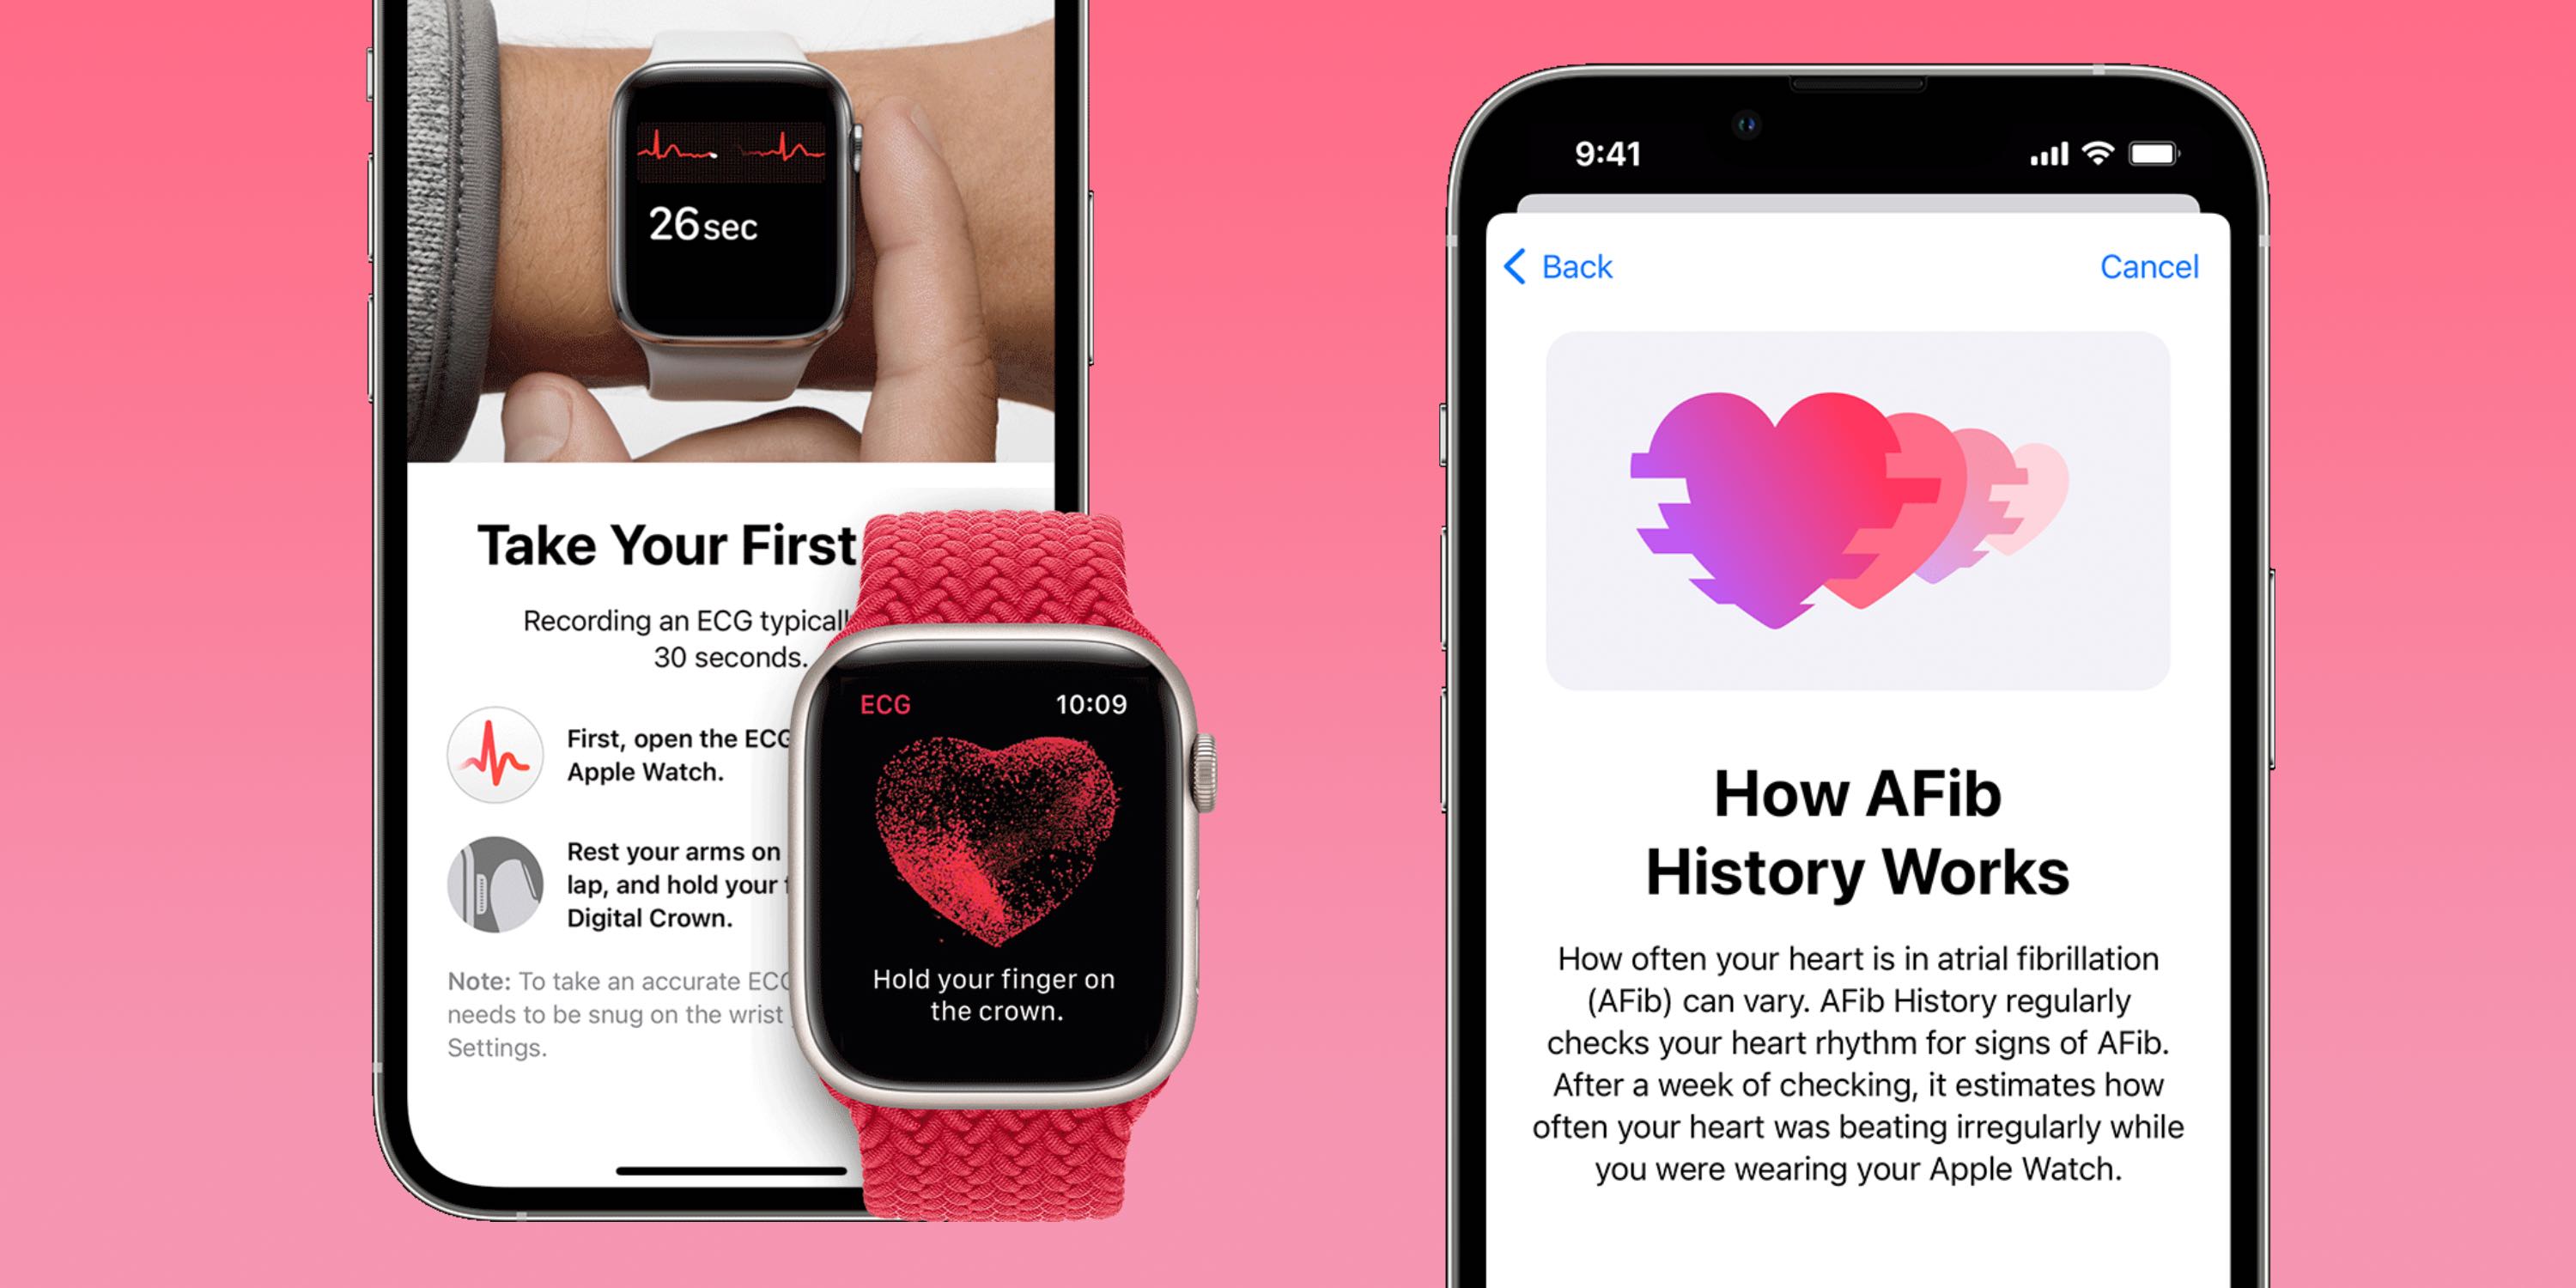 heart-health-apple-watch-2.jpg?quality=82&strip=all